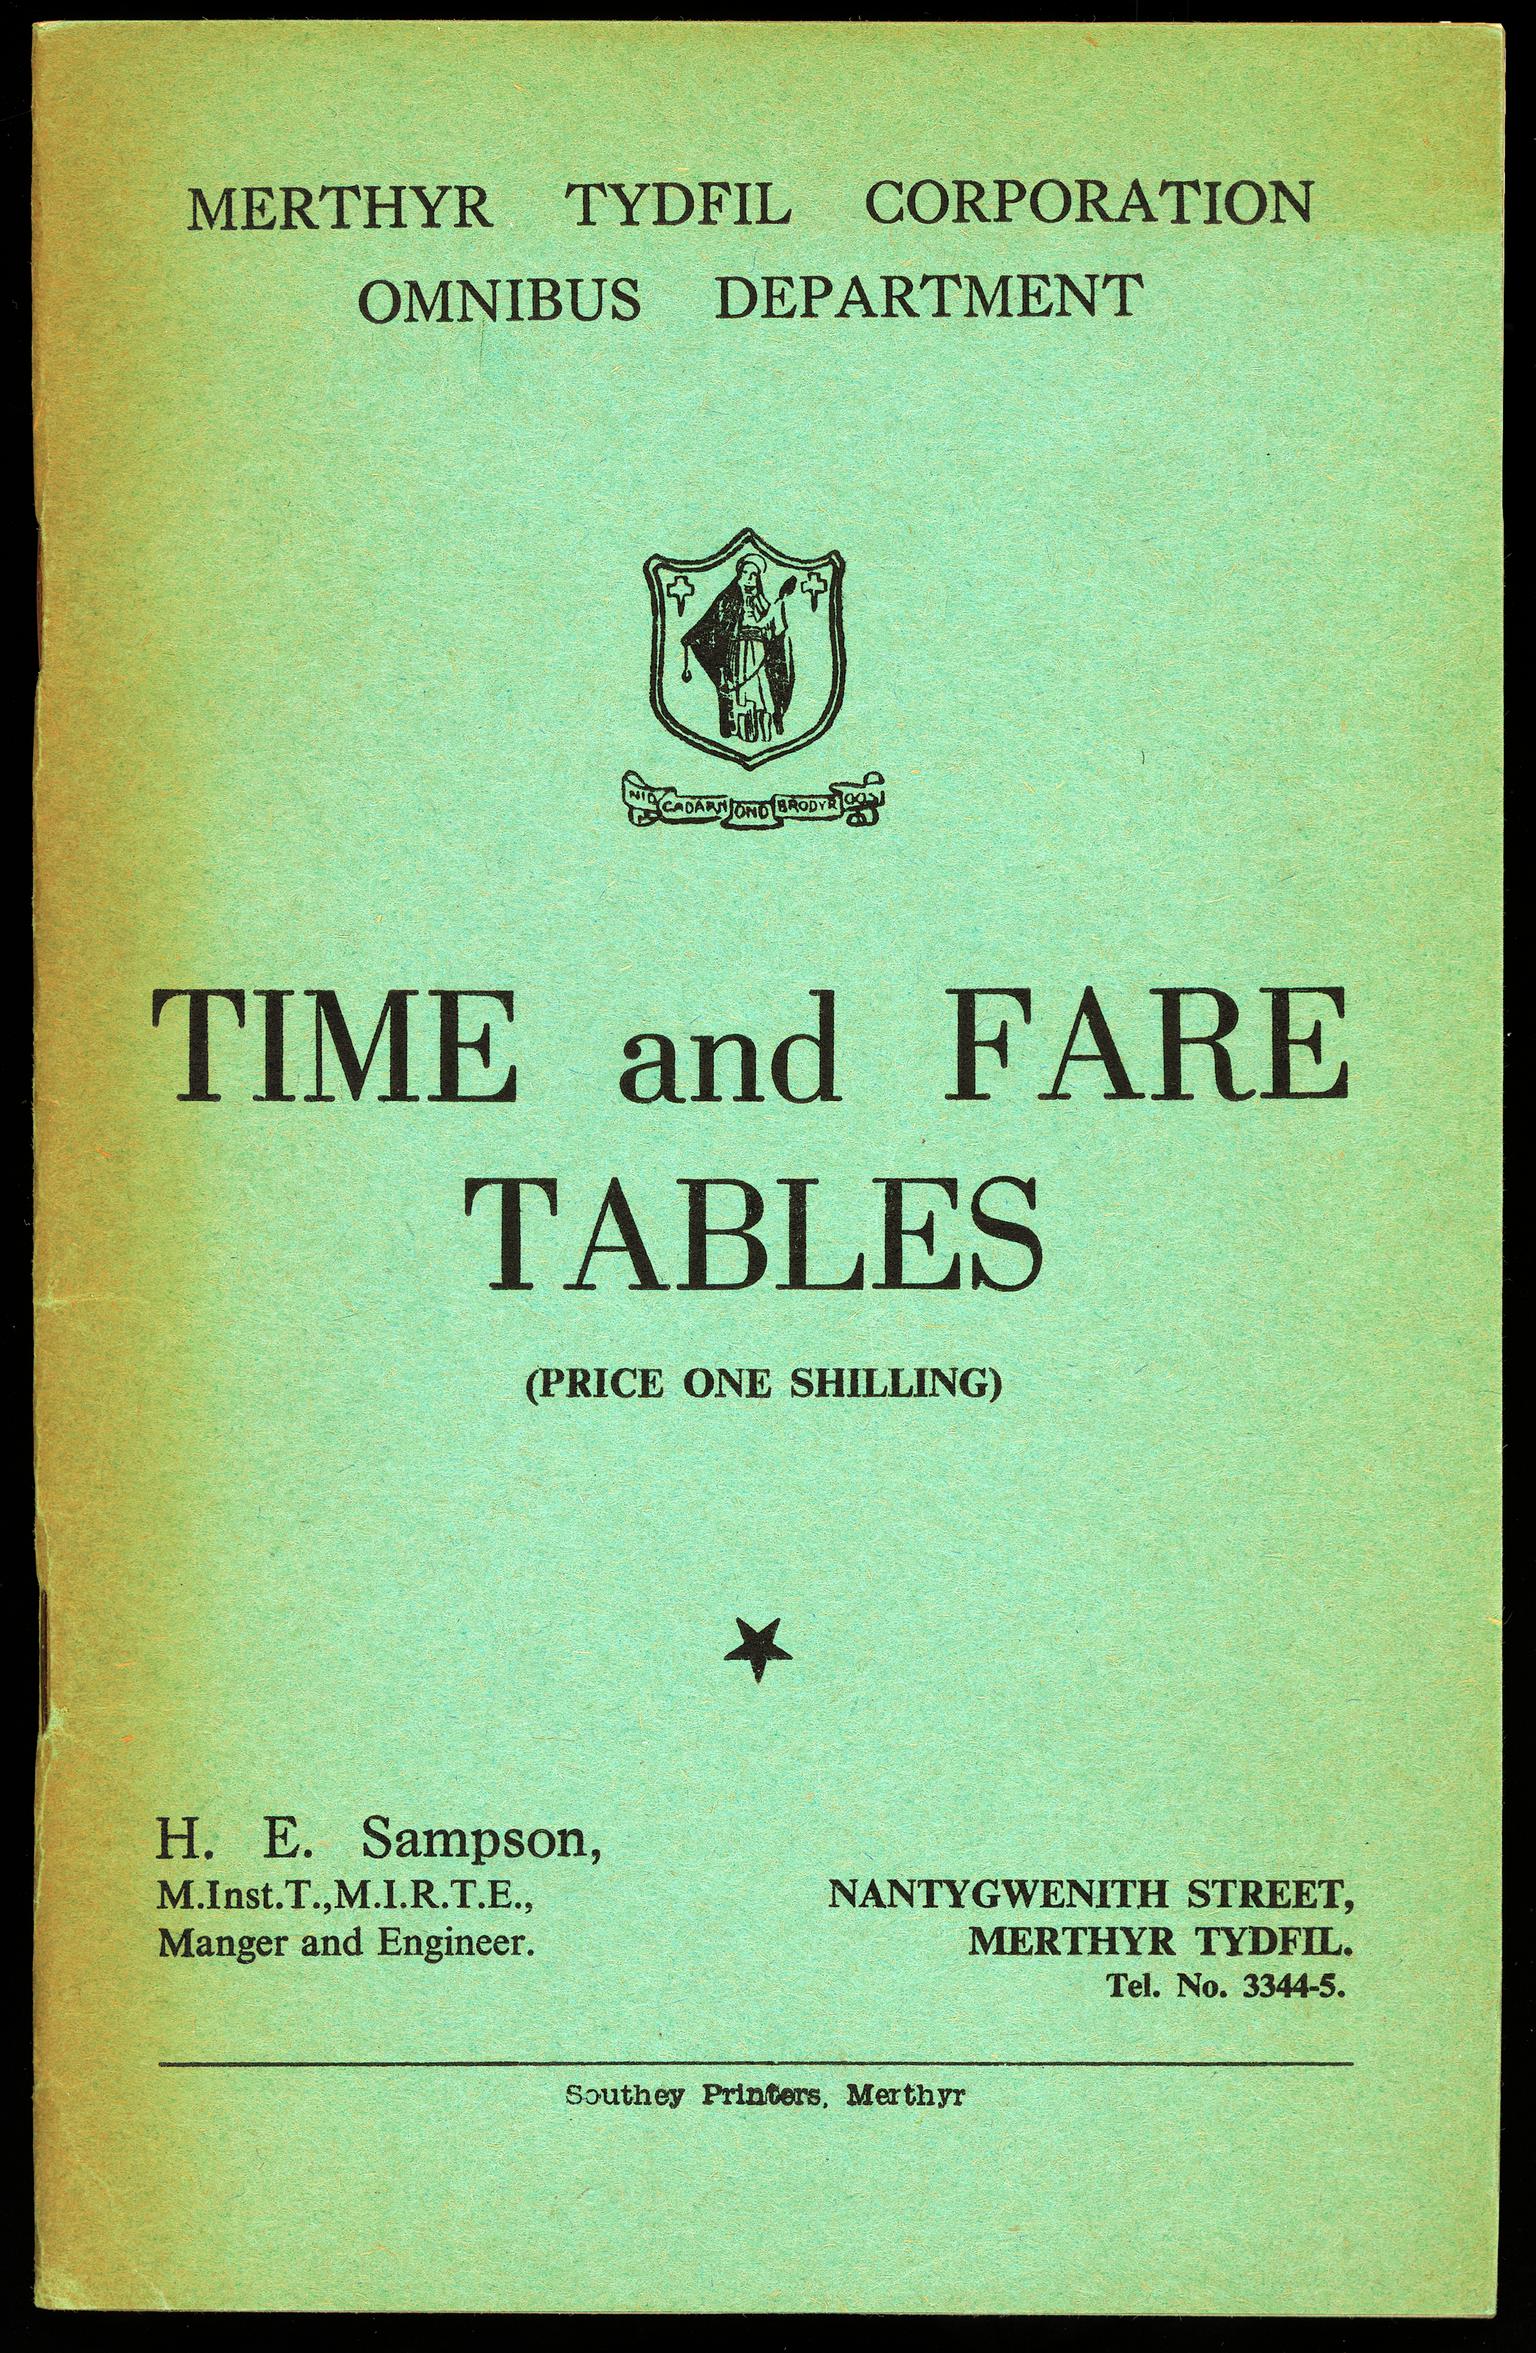 Merthyr Tydfil Corp. Omnibus Dept. time & fare tables